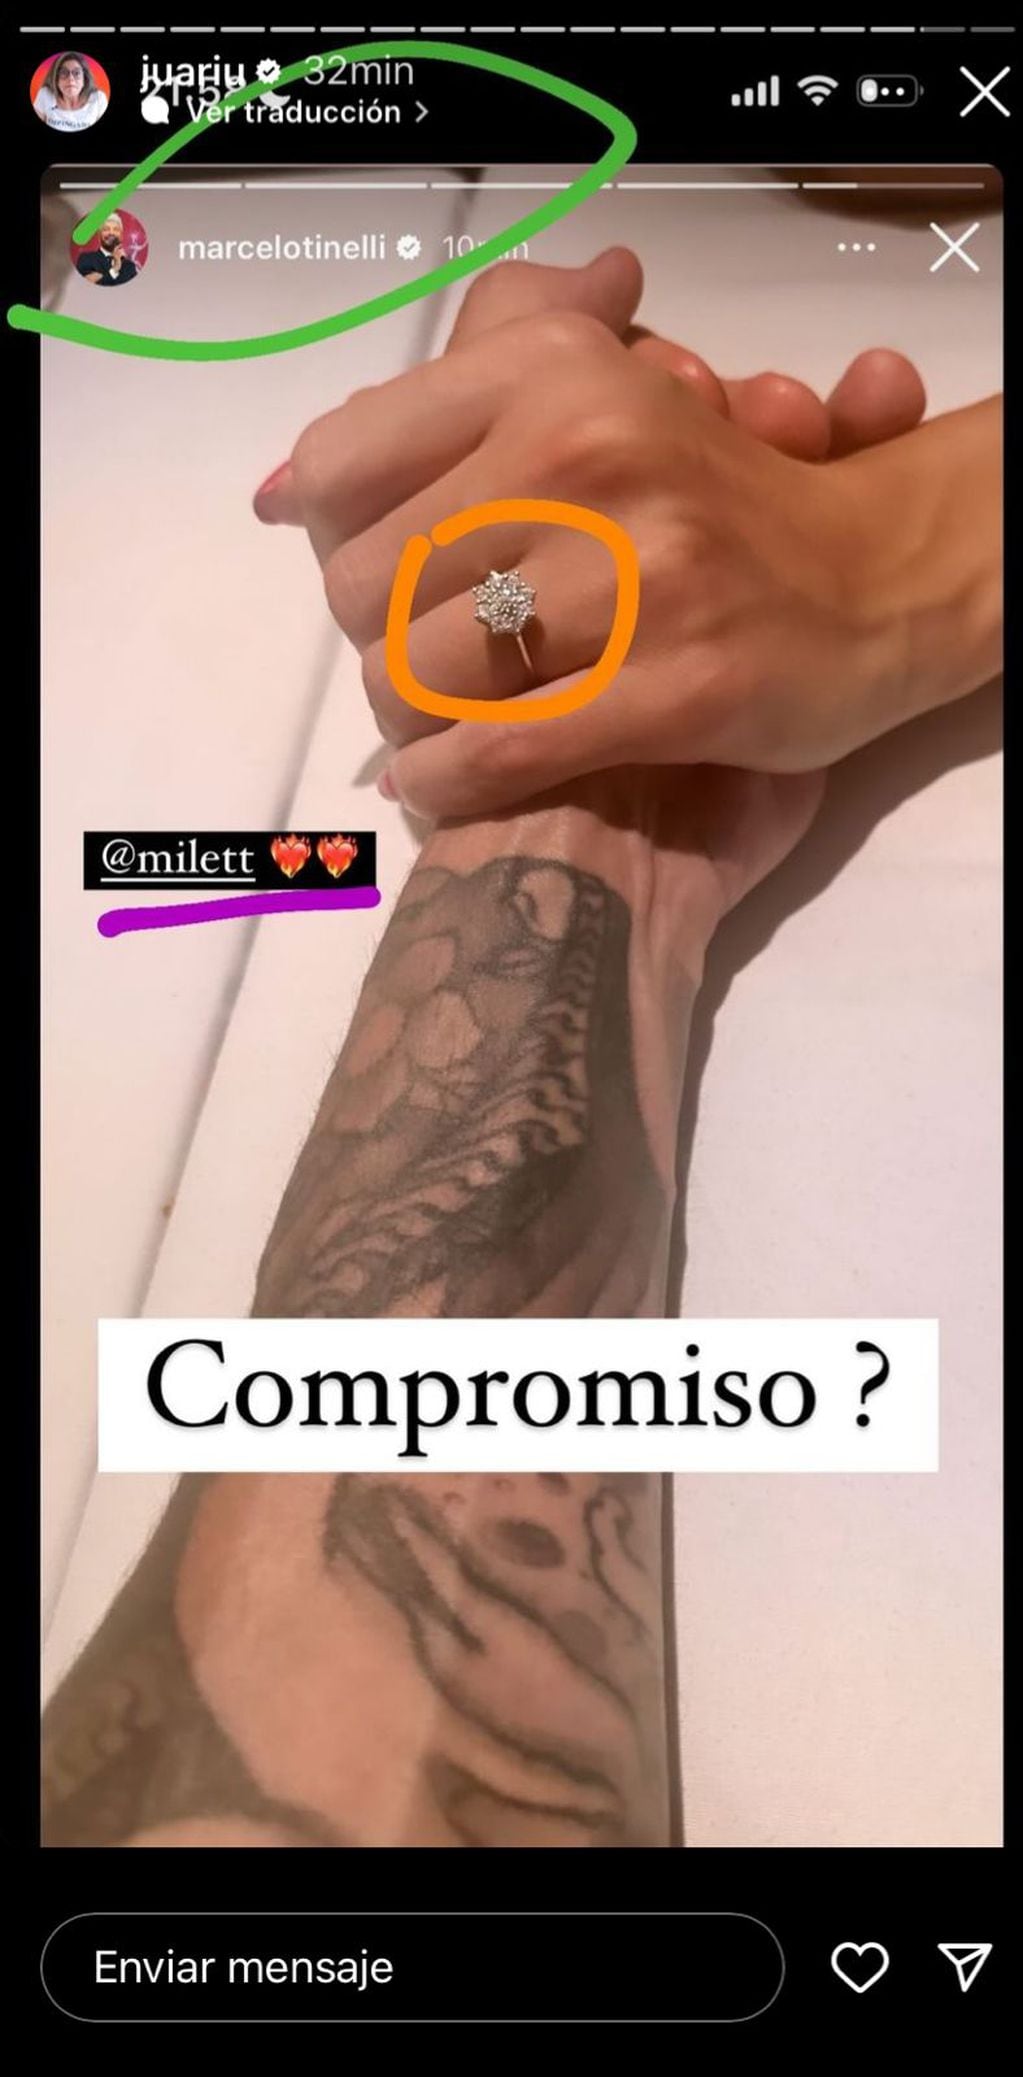 Marcelo Tinelli se comprometió con Milett Figueroa. Captura de pantalla.